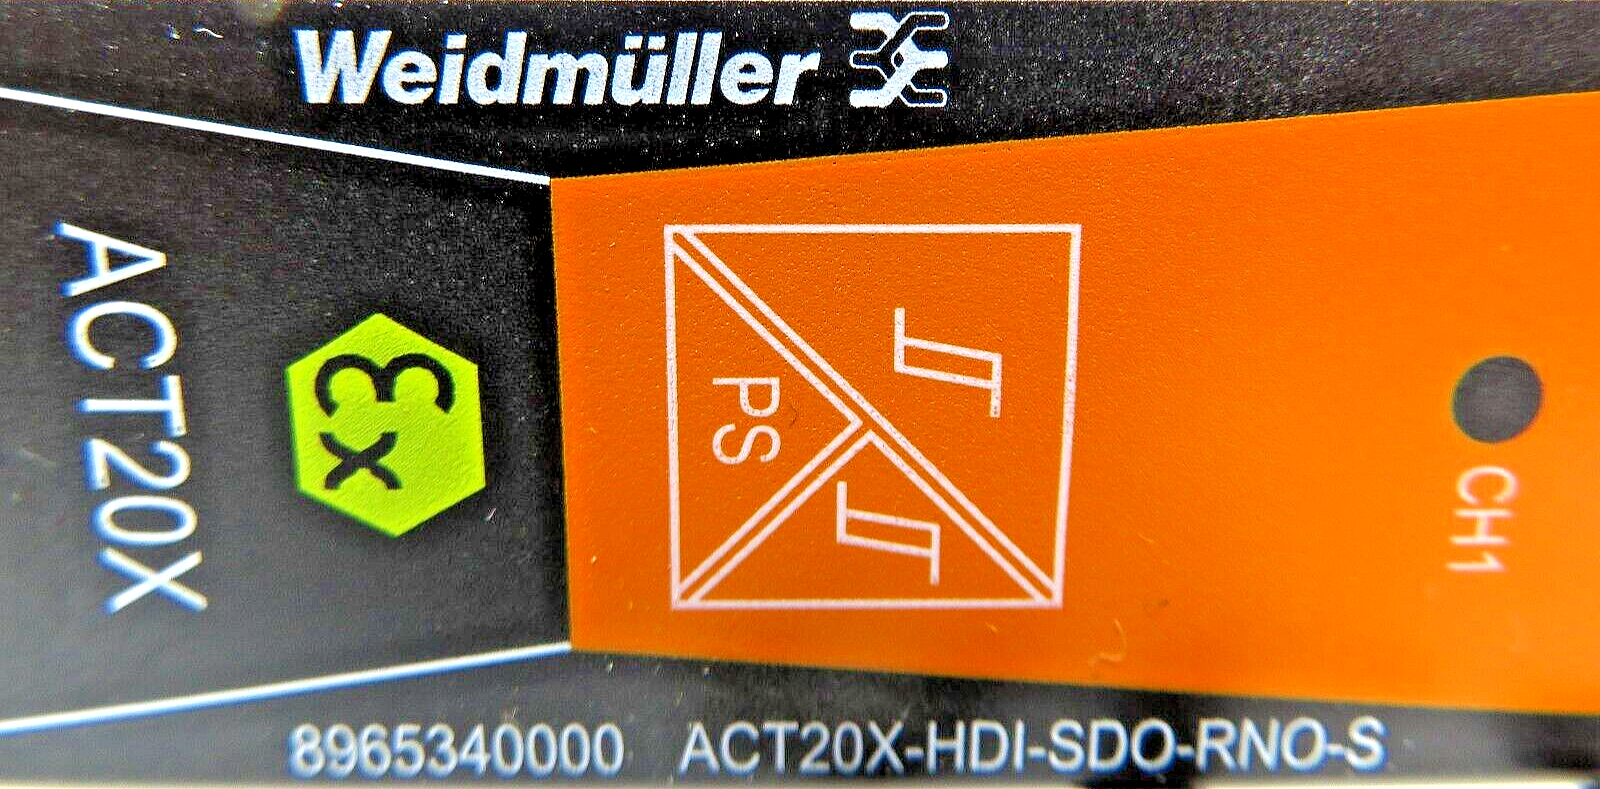 Weidmuller ACT20X-HDI-SDO-RNO-S 8965340000 1-CHNL. EX Signal Isolating Converter